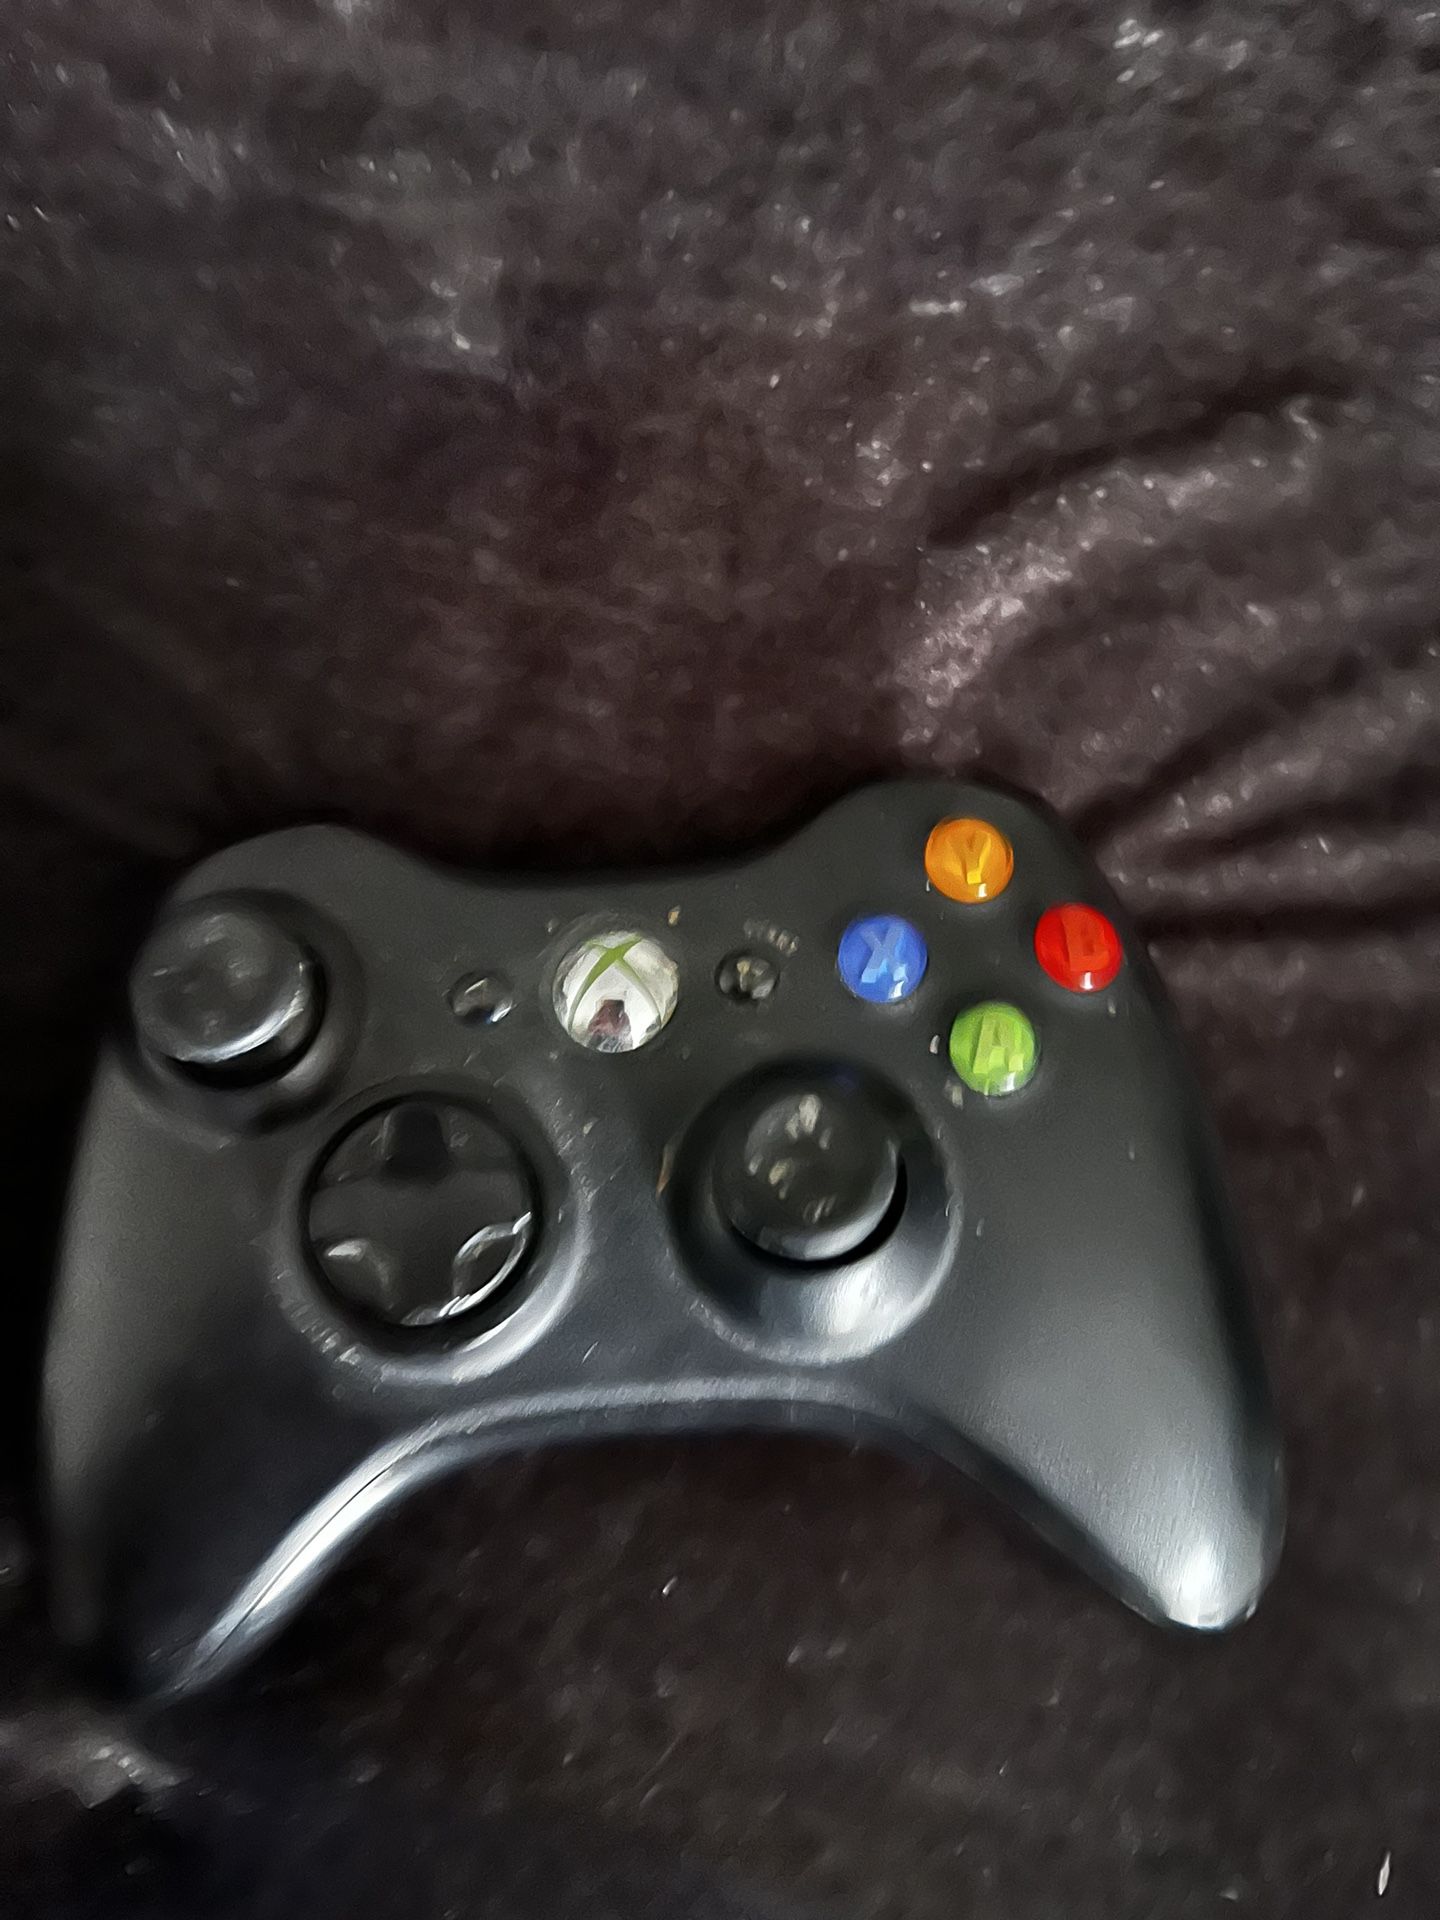 Microsoft Xbox 360 Wireless Gaming Controller - Black